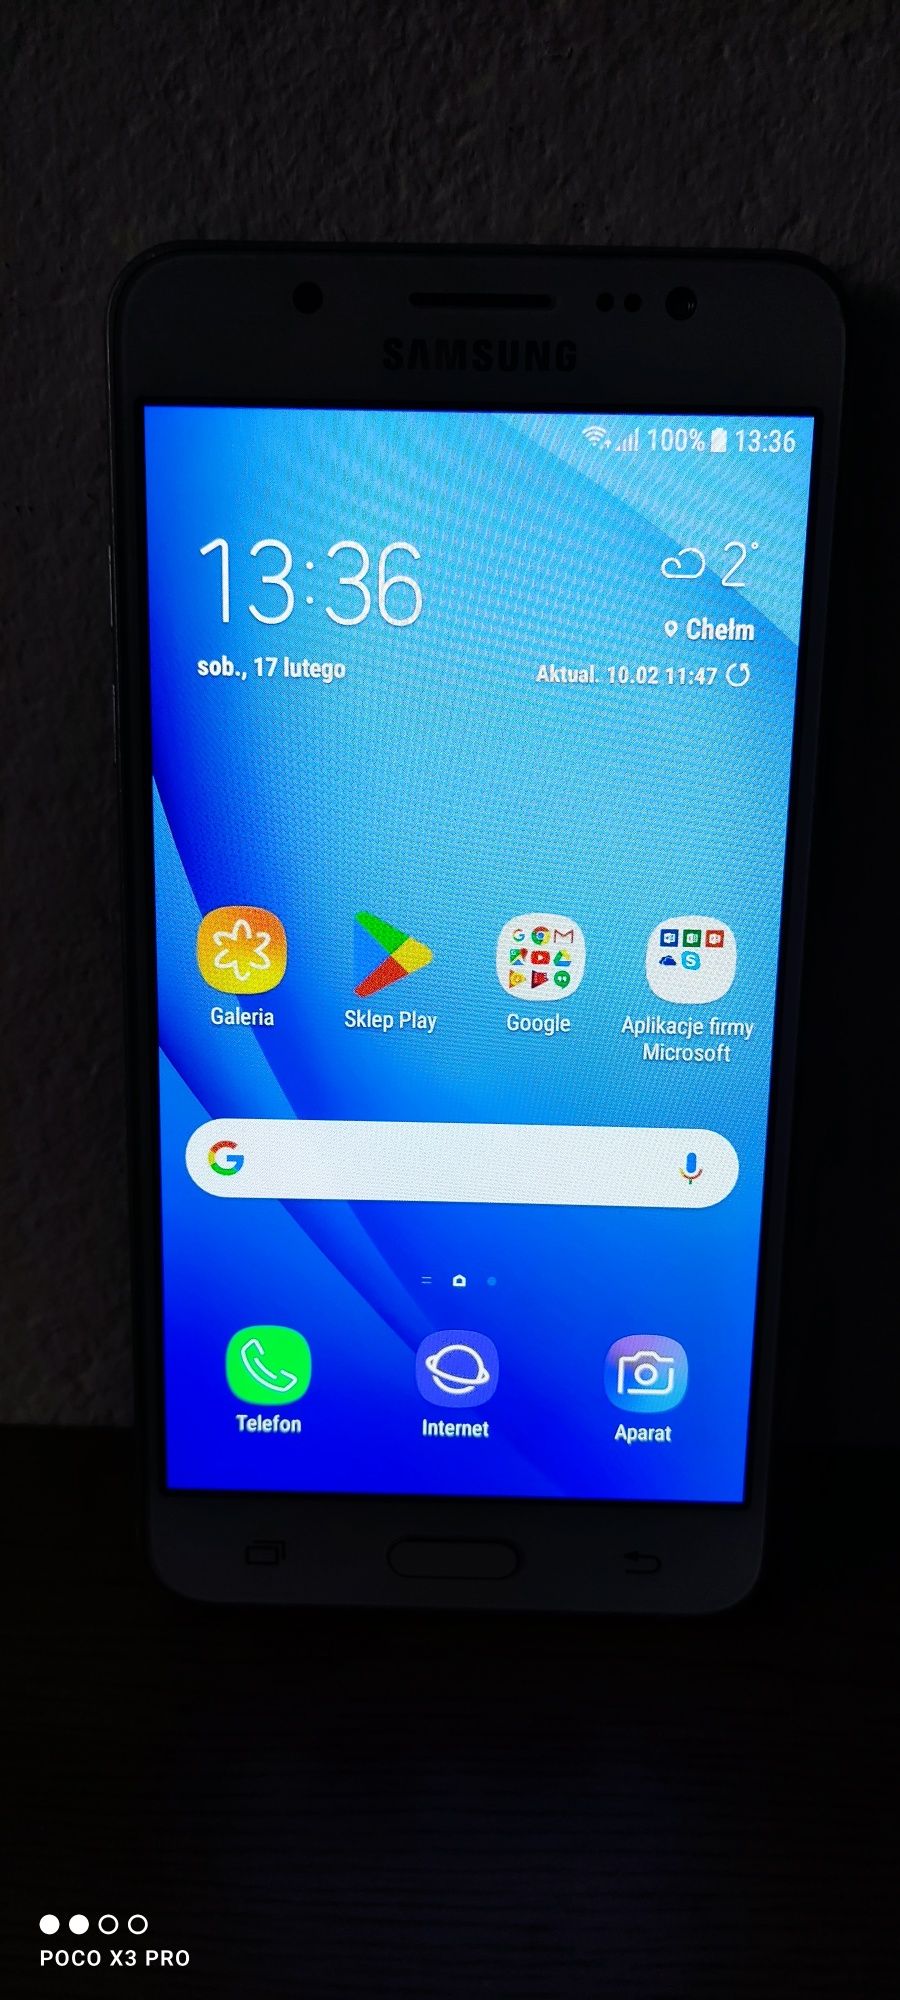 Samsung Galaxy J5 + druga bateria